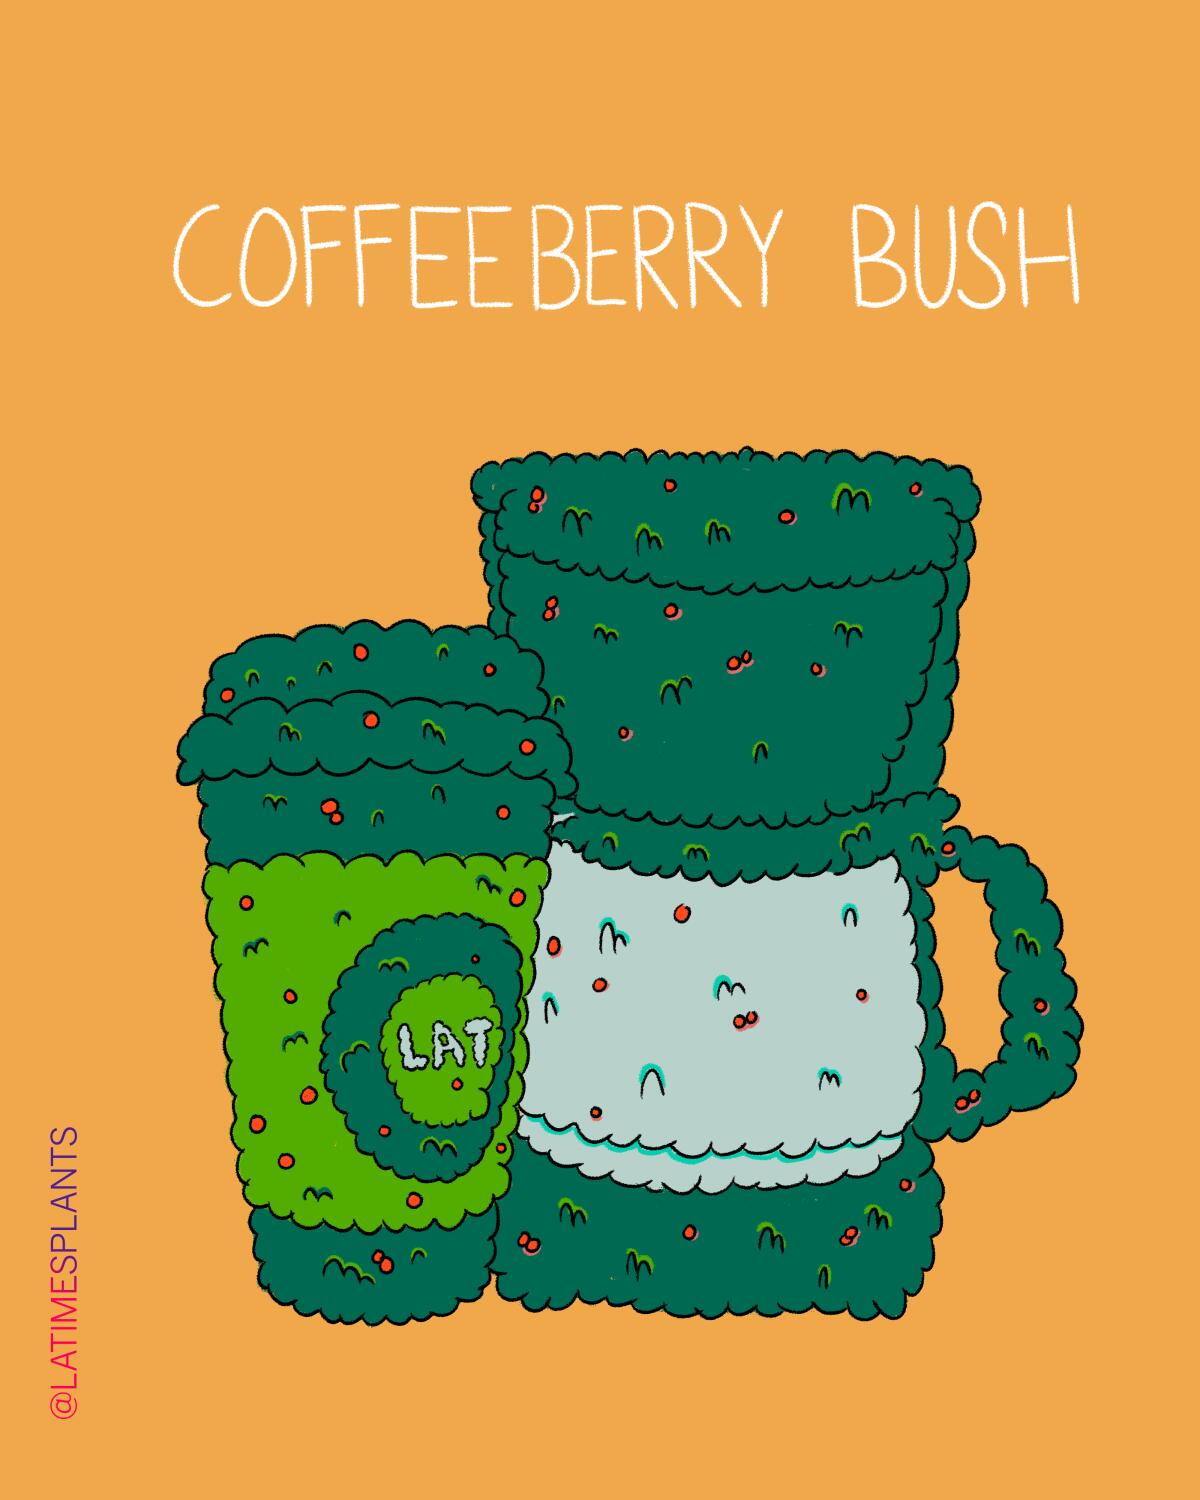 Coffeeberry bush.